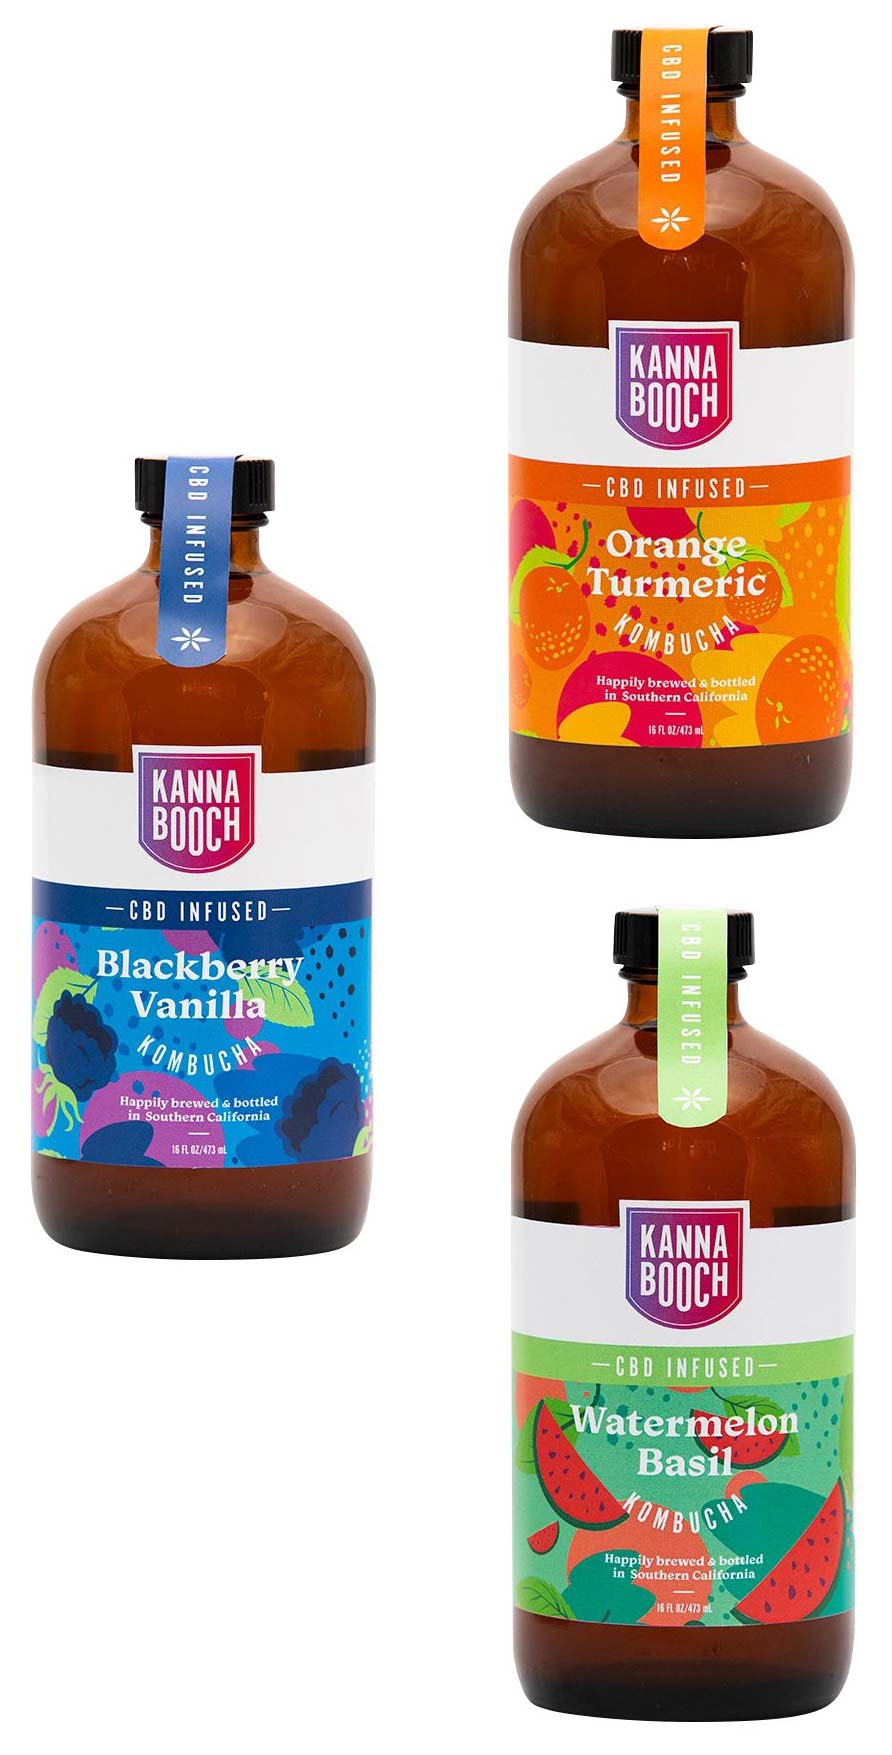 Kannabooch bottle label design